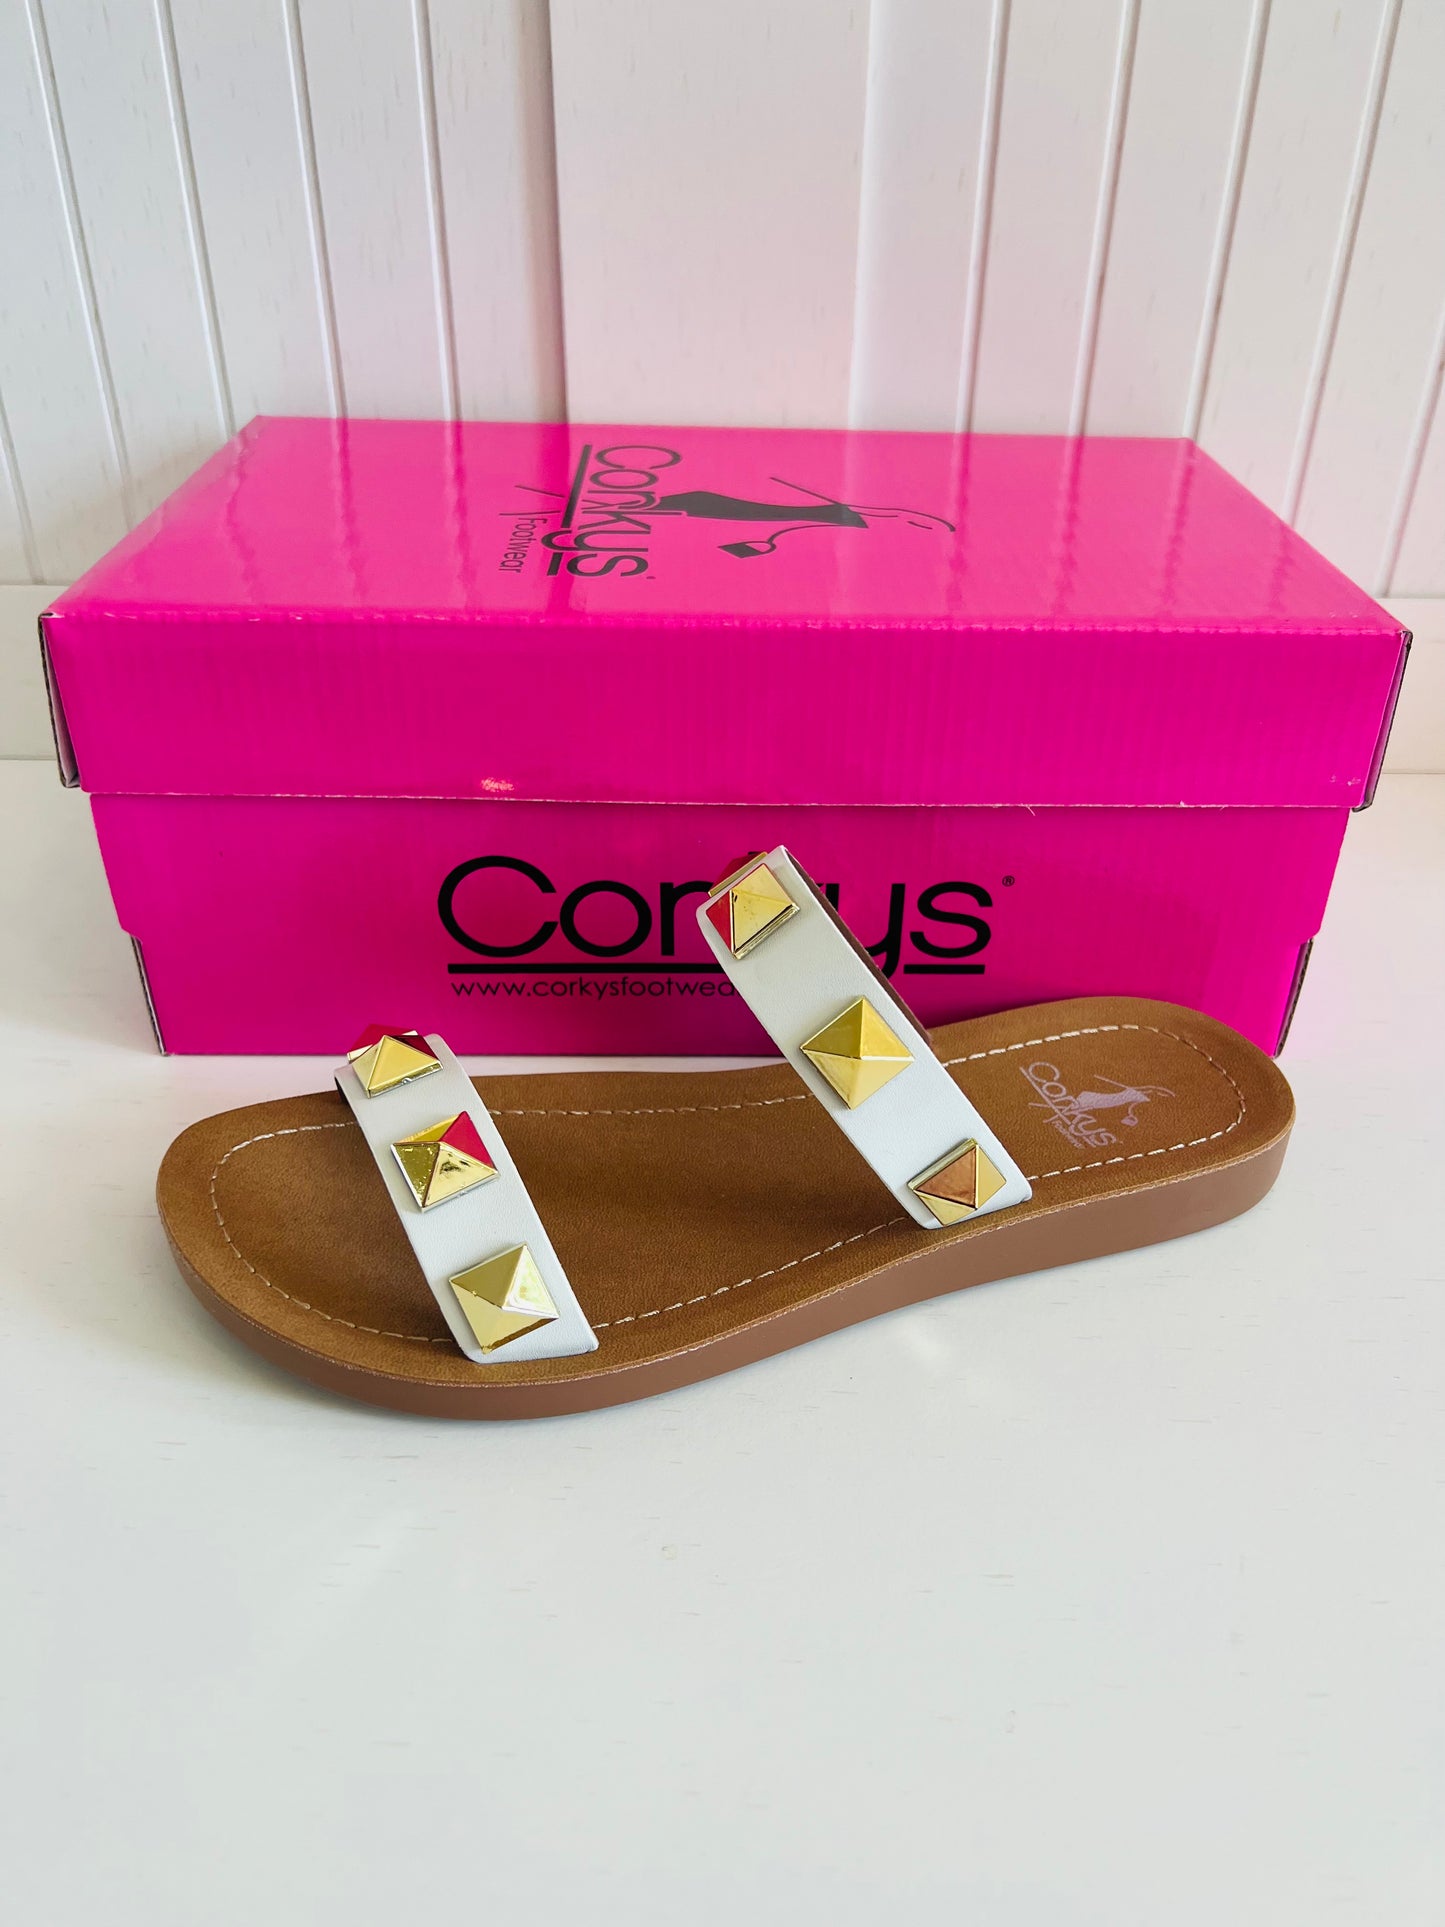 Daiquiri Sandals by Corkys